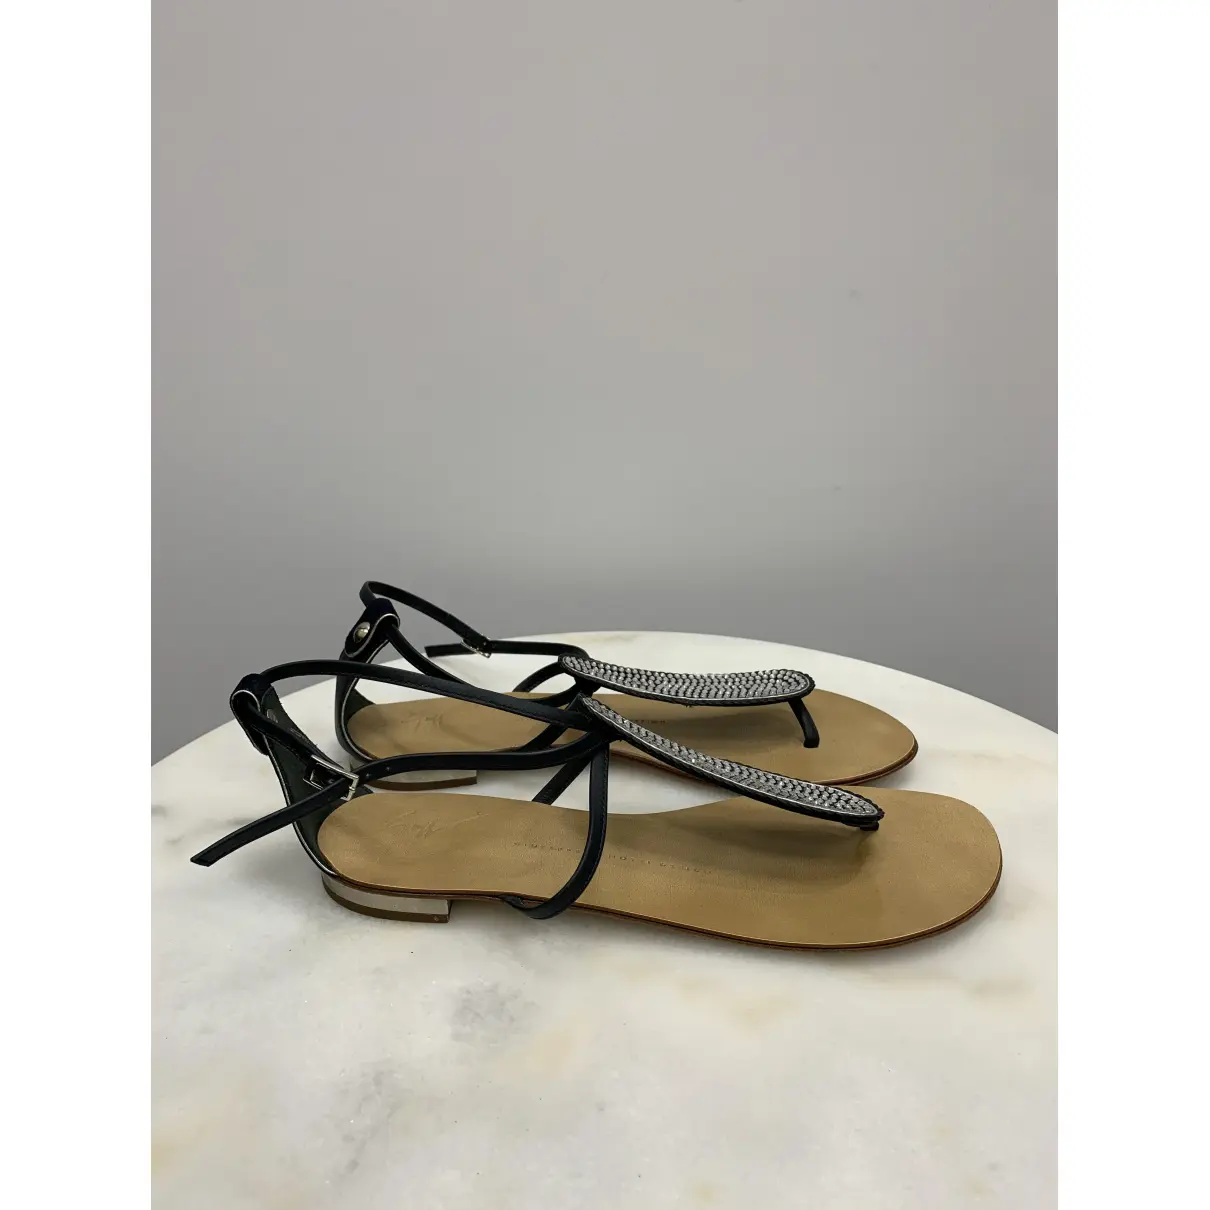 Buy Giuseppe Zanotti Leather sandal online